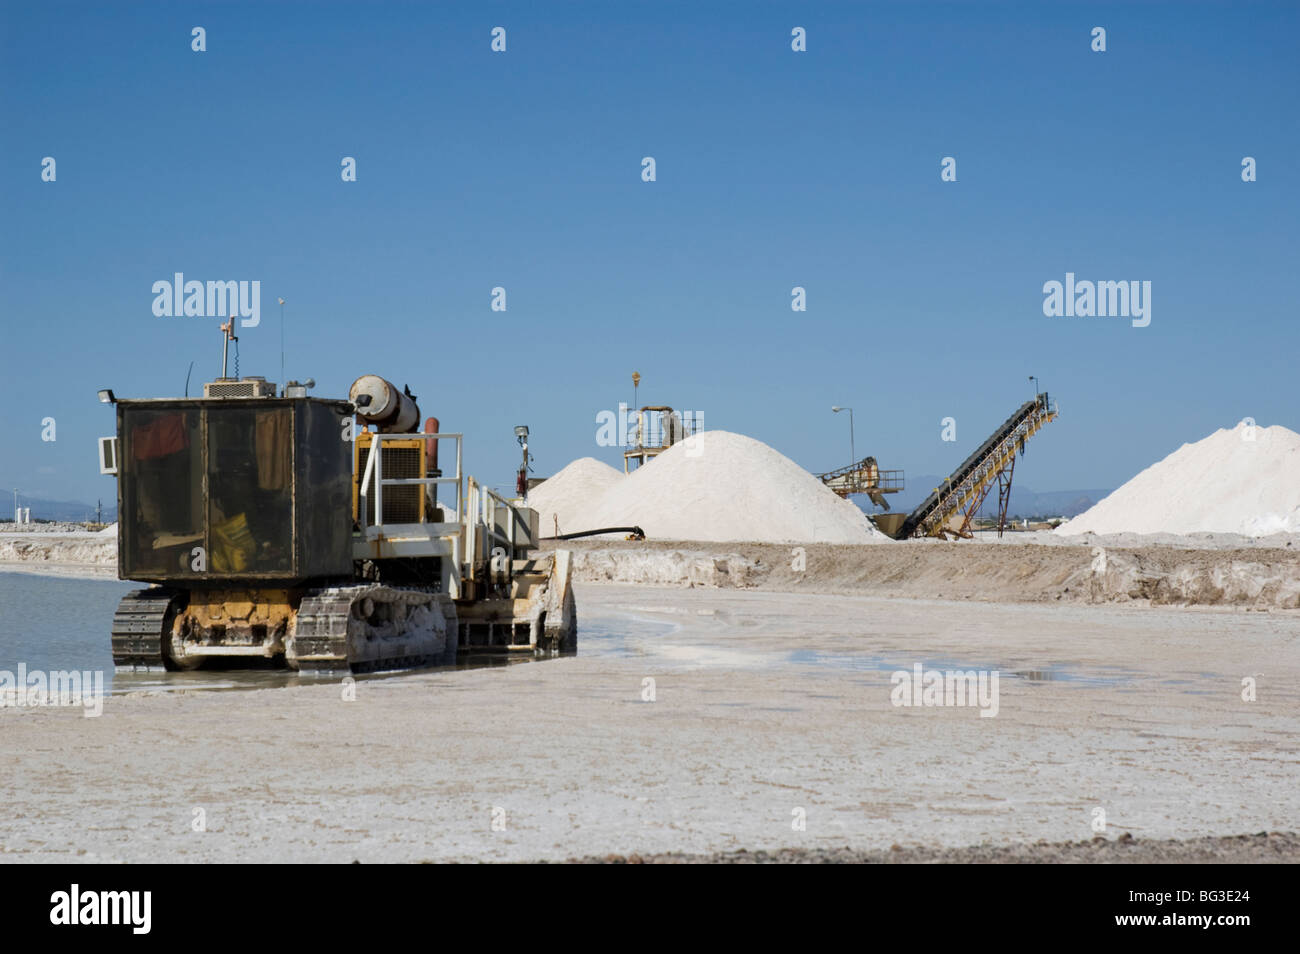 A Morton salt production facility that uses the Solar evaporation method, Glendale, Arizona, USA Stock Photo